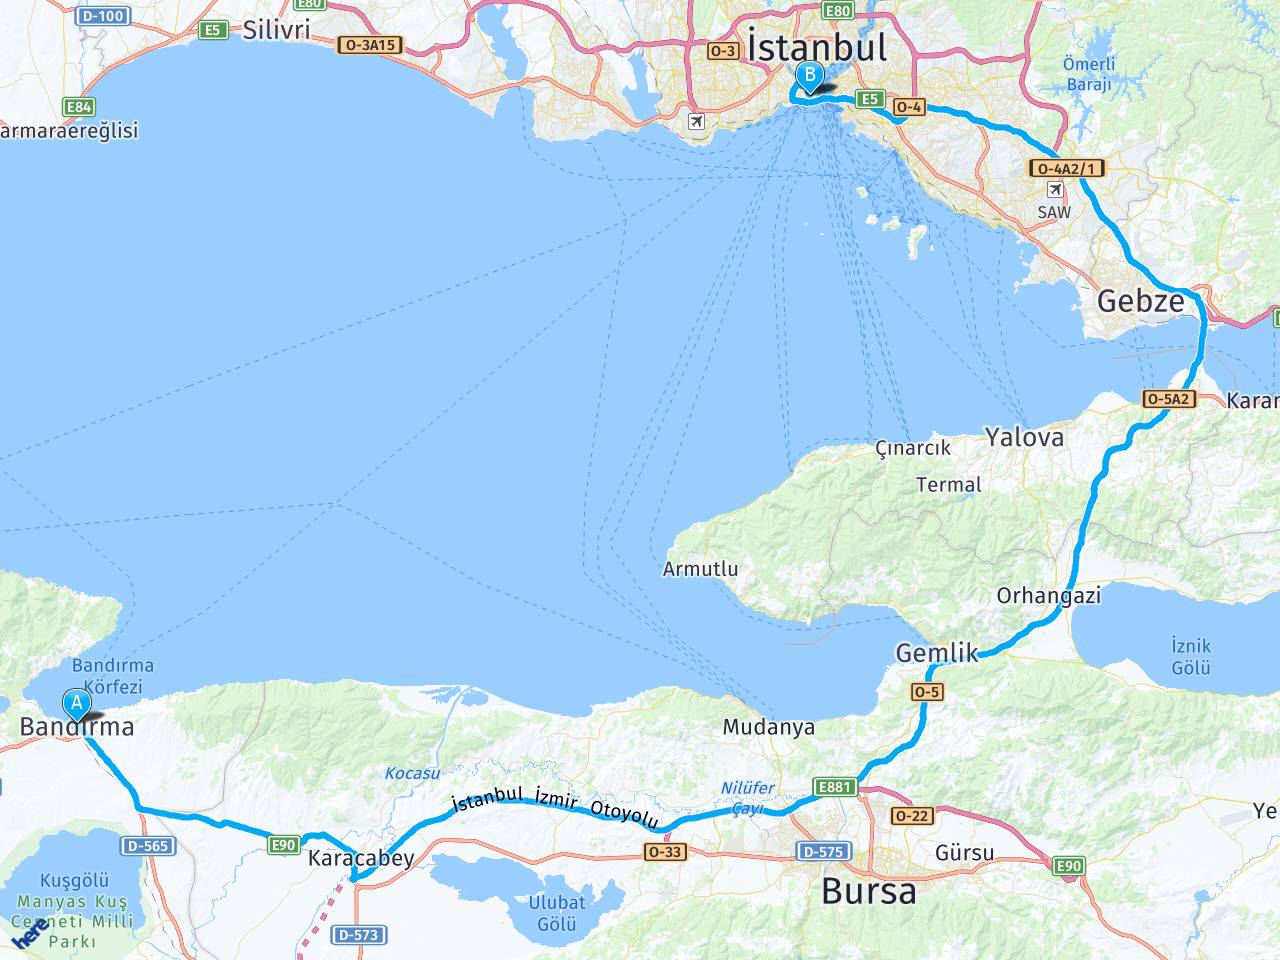 bandirma istanbul arasi mesafe bandirma istanbul yol haritasi bandirma istanbul kac saat kac km